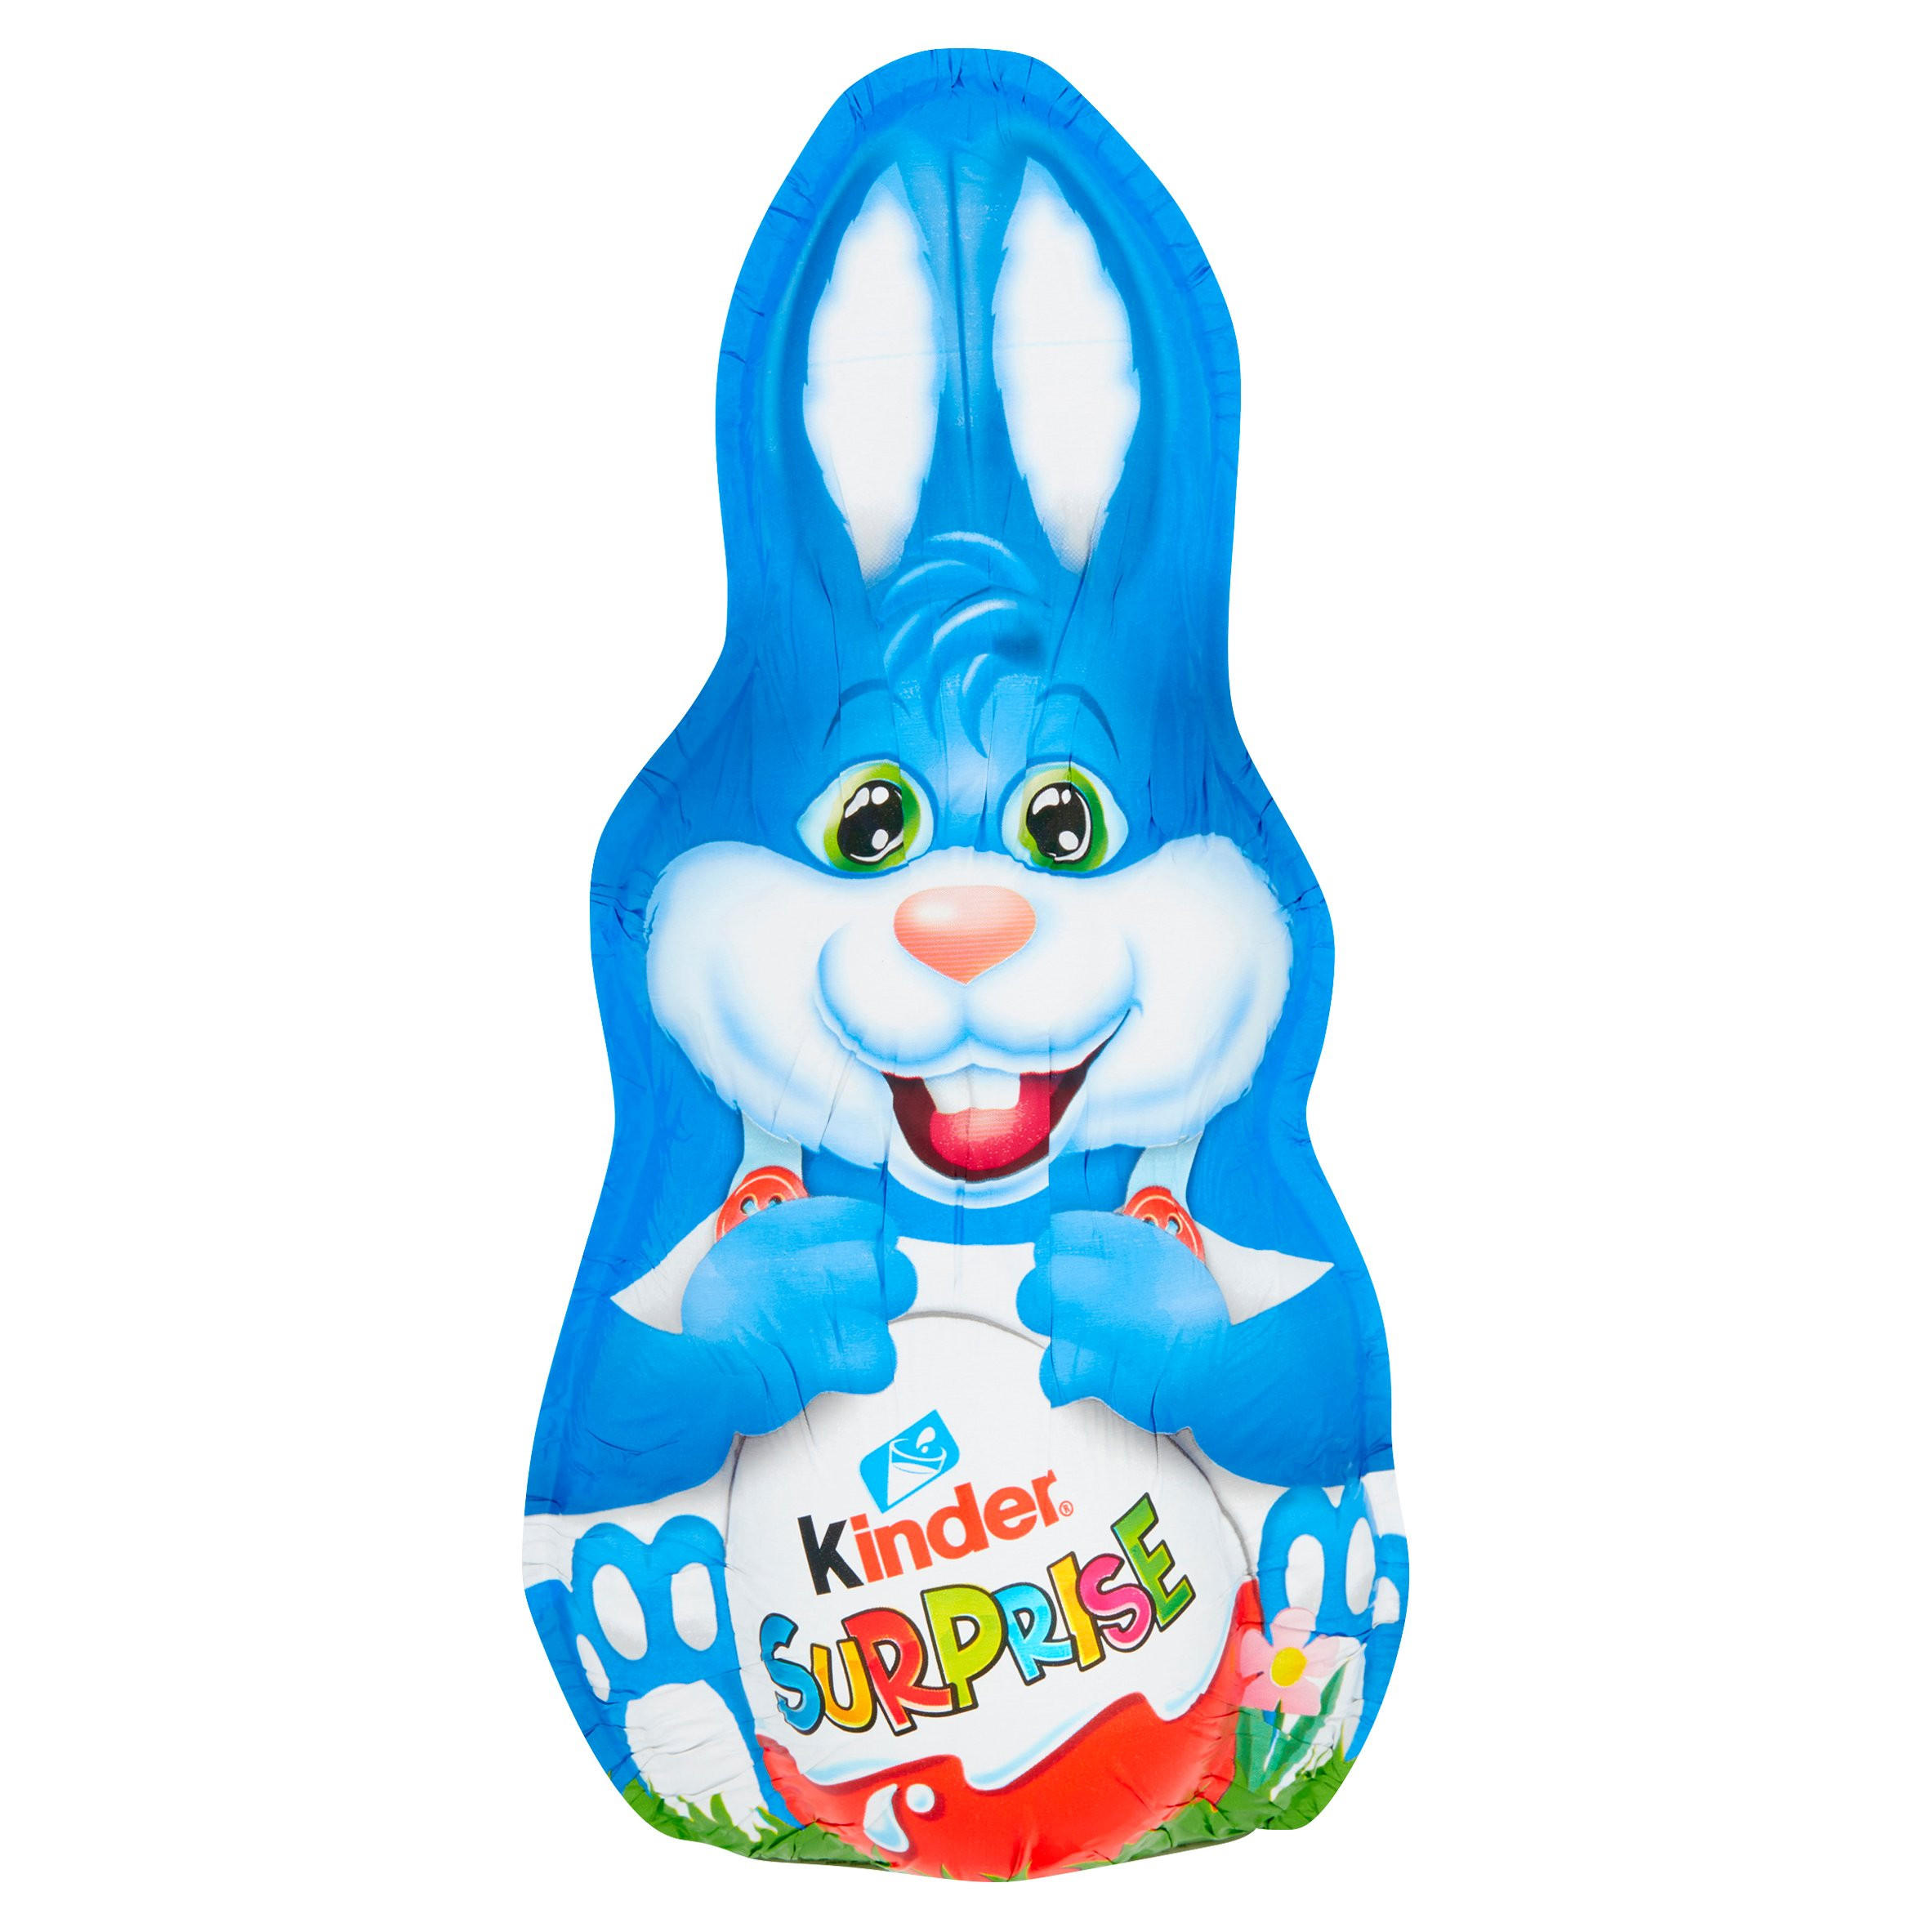 Kinder Easter Rabbit With Surprise 75g Iceland Foods